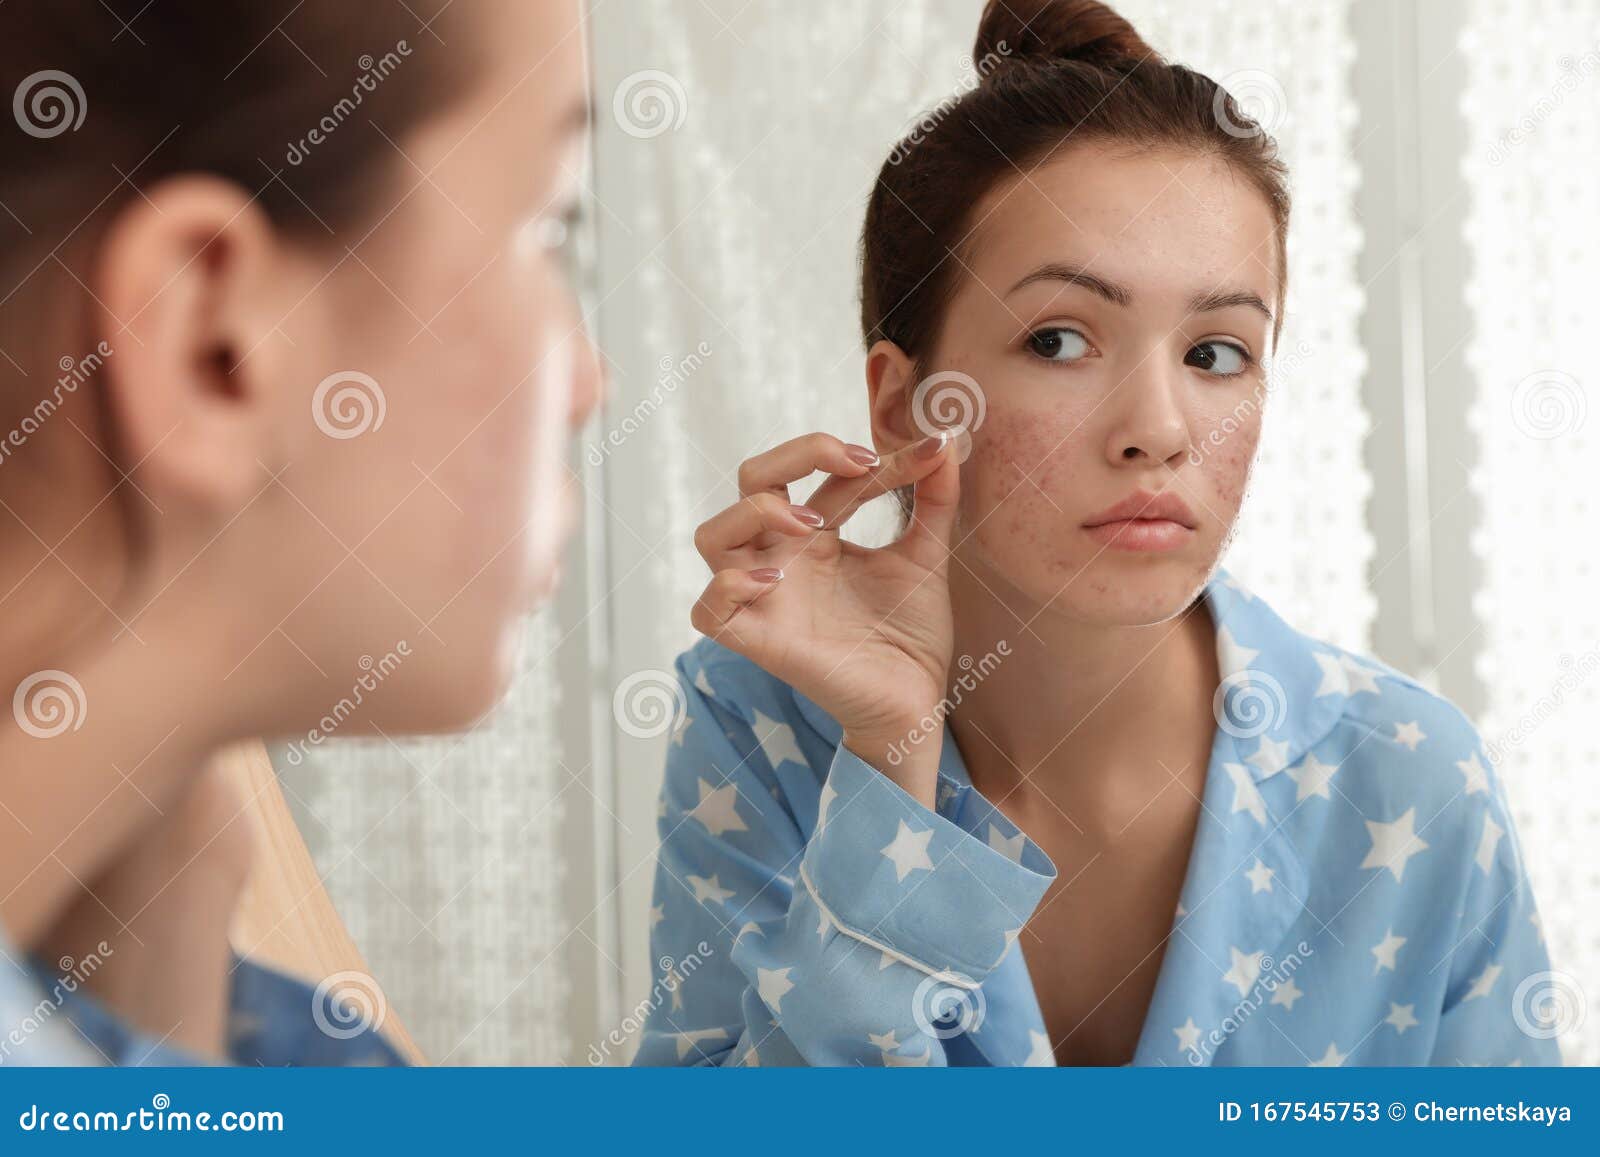 teen girl applying acne healing patch near mirror